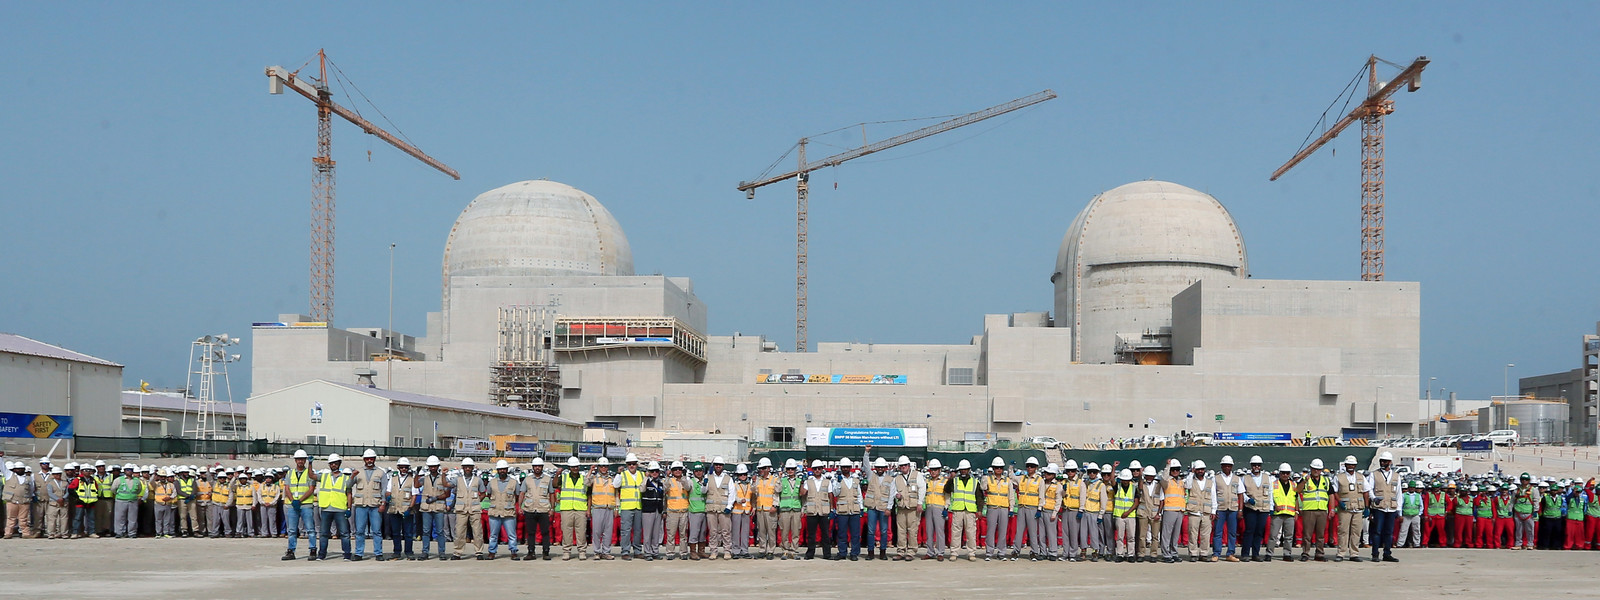 enec-celebrates-50-million-safe-work-hours-at-barakah-nuclear-energy-plant-5d3583282d62c.jpg (Gallery Image)